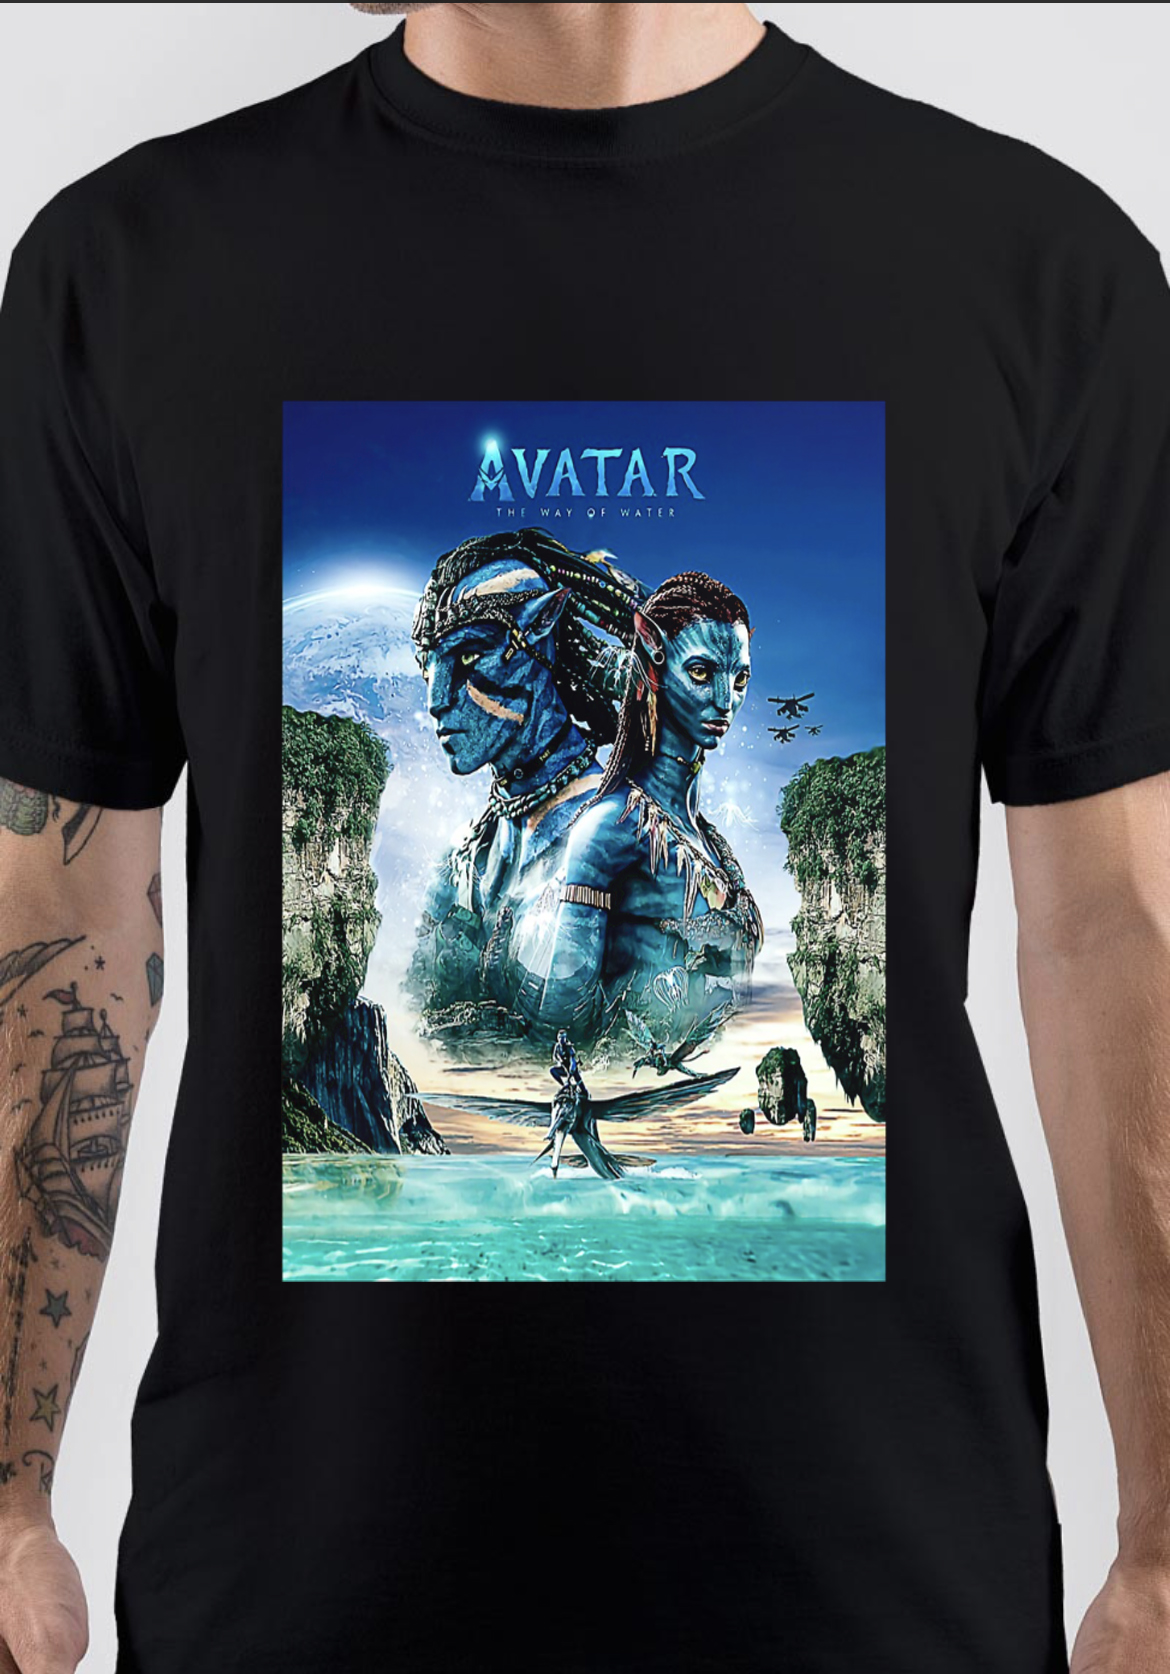 Avatar T-Shirt And Merchandise